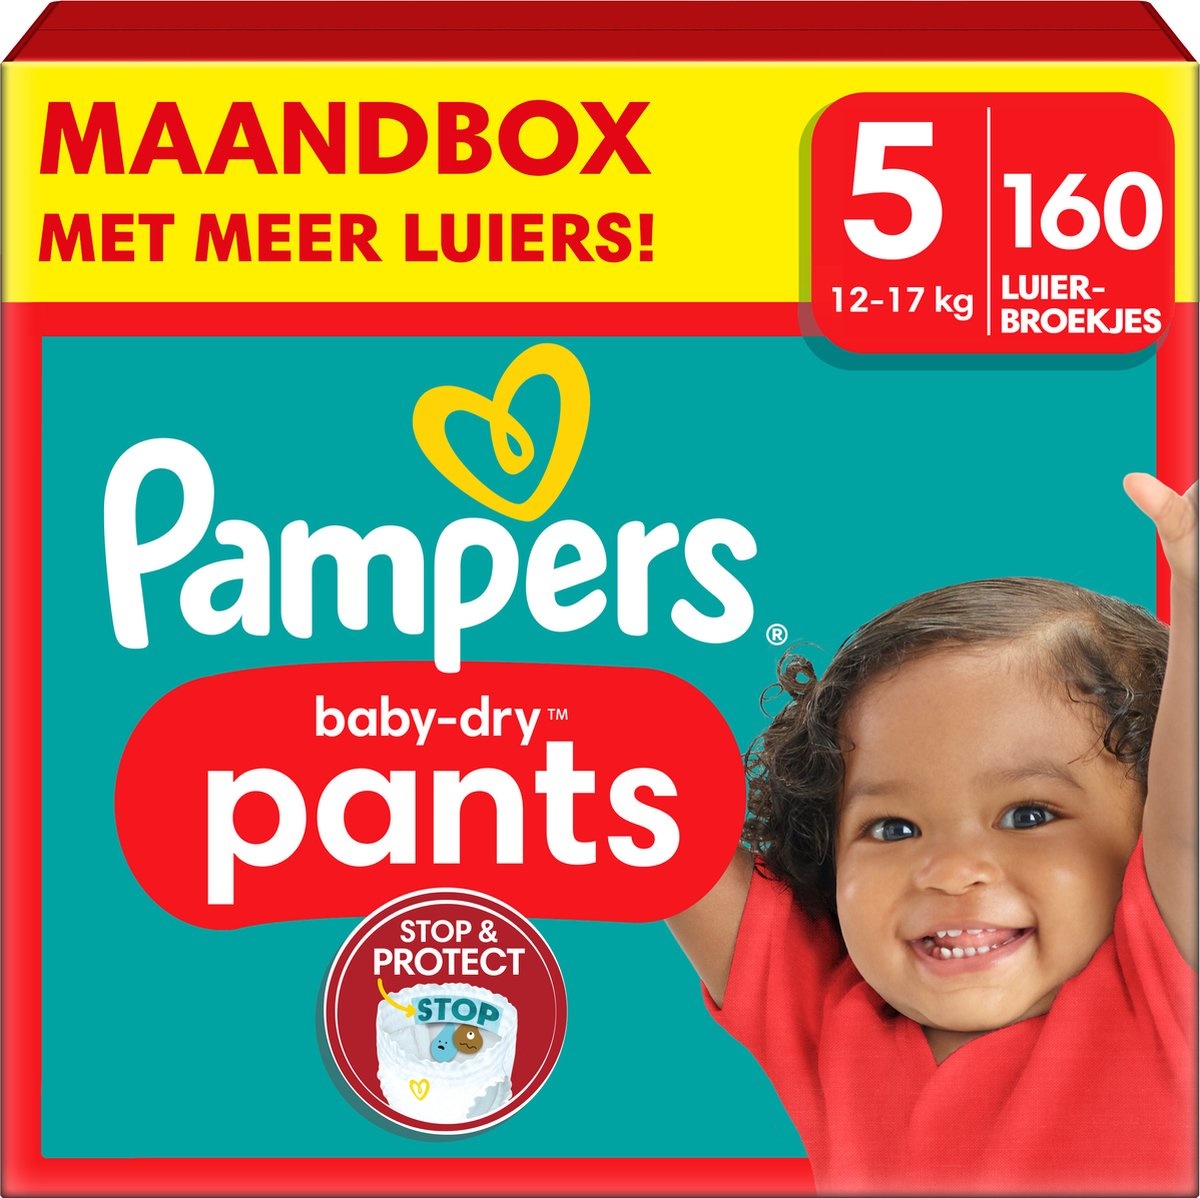 soort geloof Eekhoorn Pampers Baby-Dry Pants - Maat 5 (12-17kg) -160 Luierbroekjes Maandbox -  Verpakking beschadigd - Onlinevoordeelshop